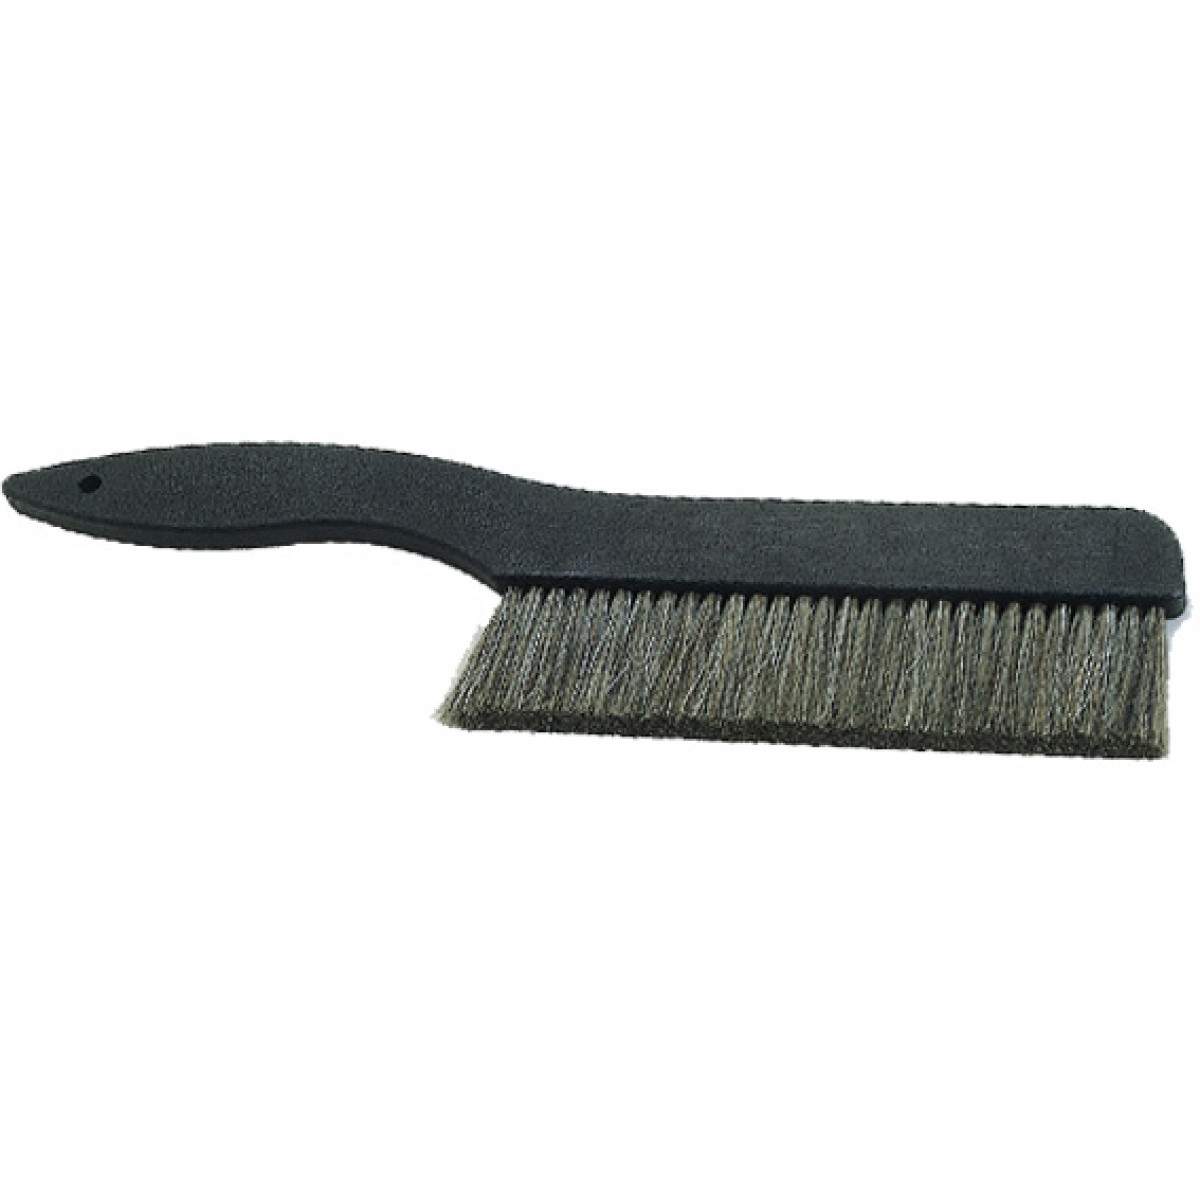 Description:Flat brush soft 140.0 mm